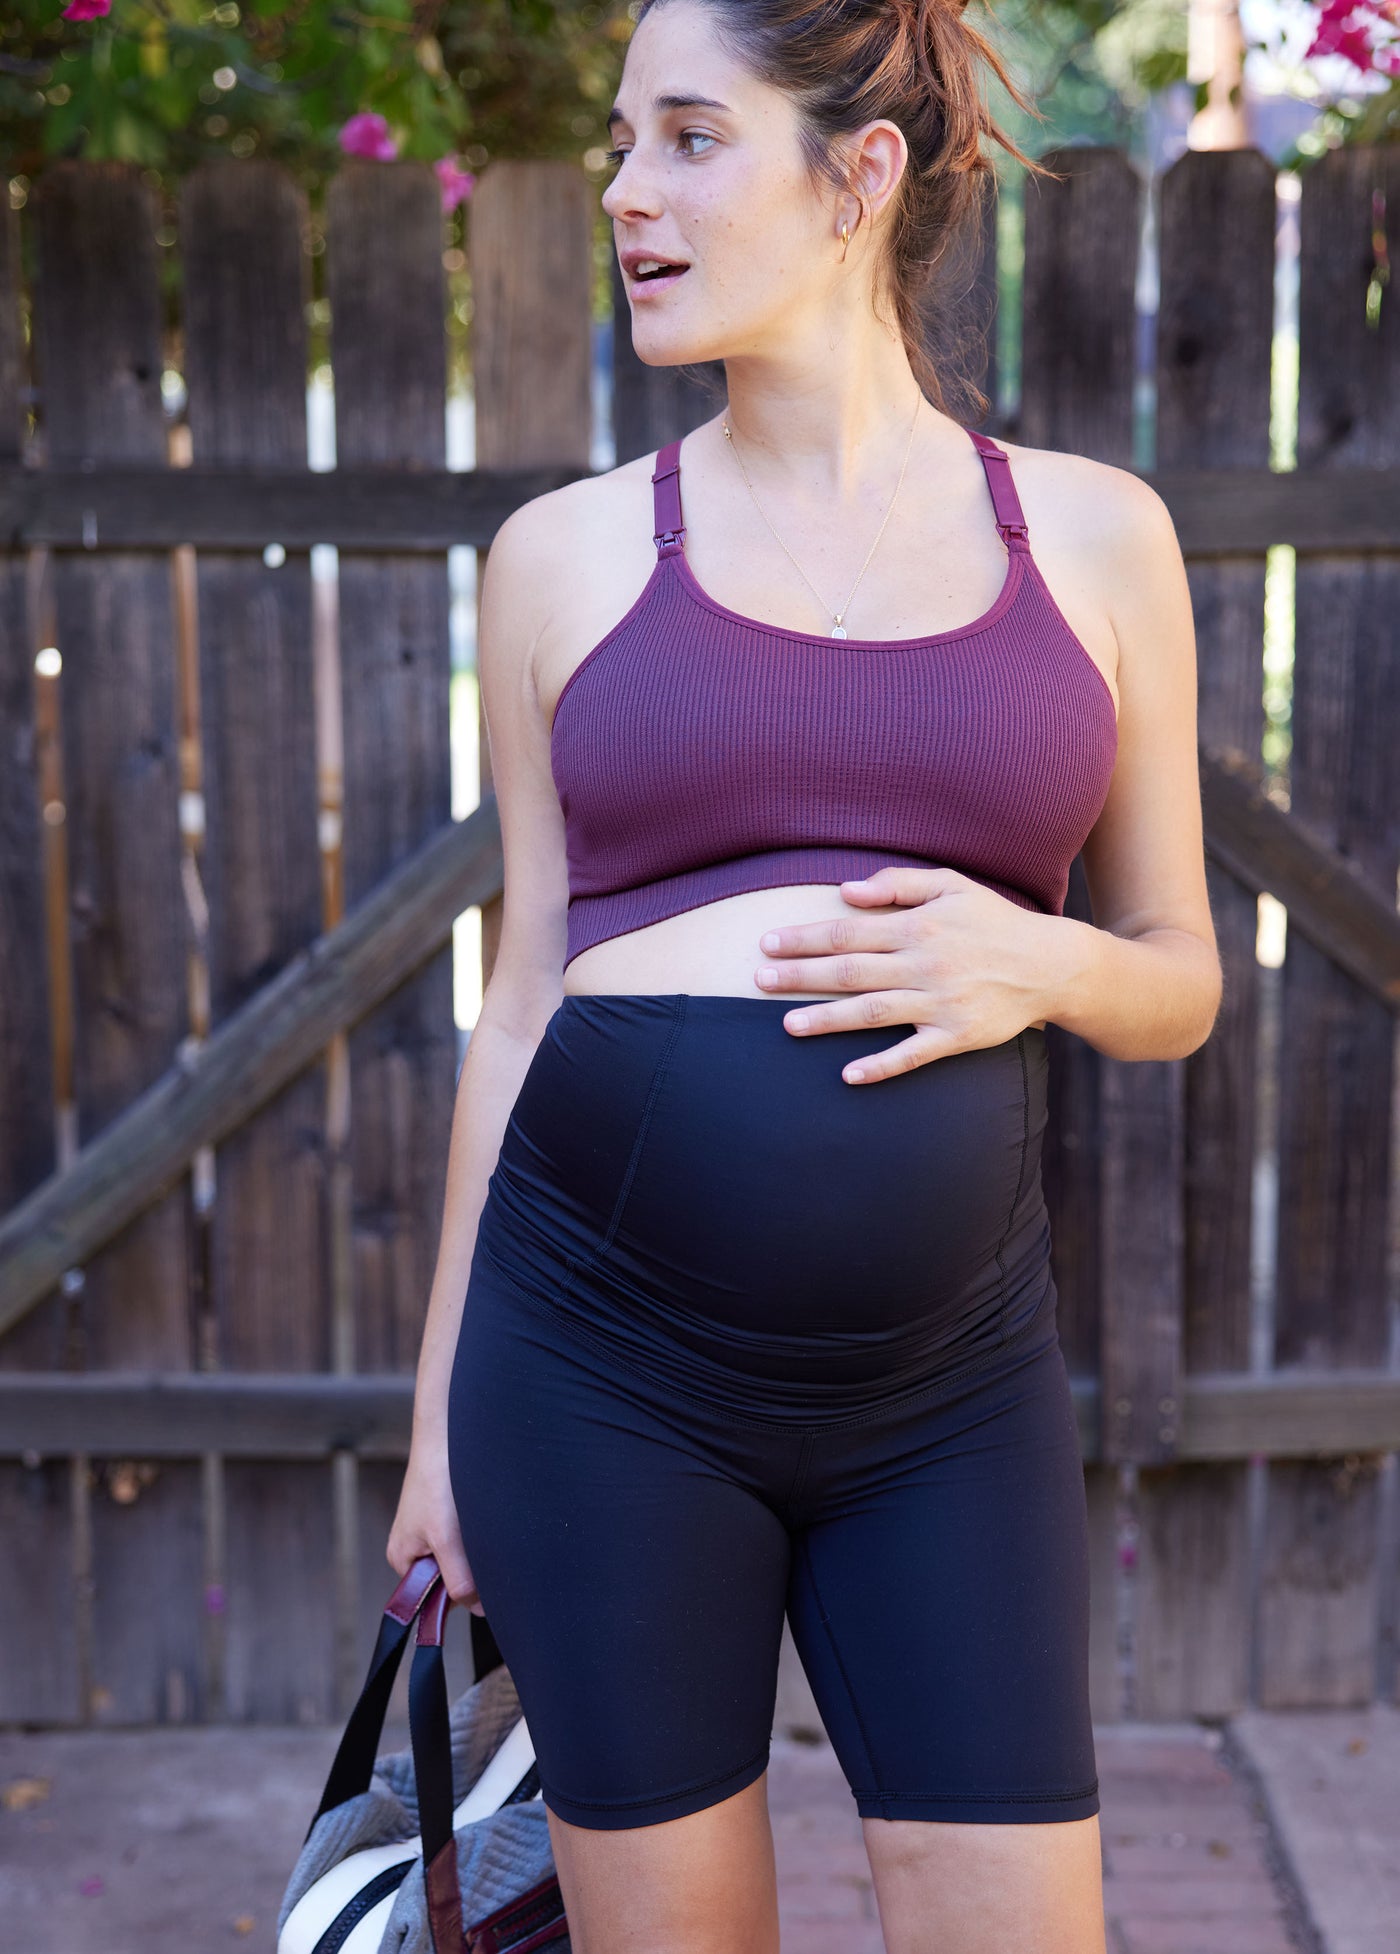 KDDYLITQ Maternity Bra Ddd Seamless Yoga Sports Bras for Women